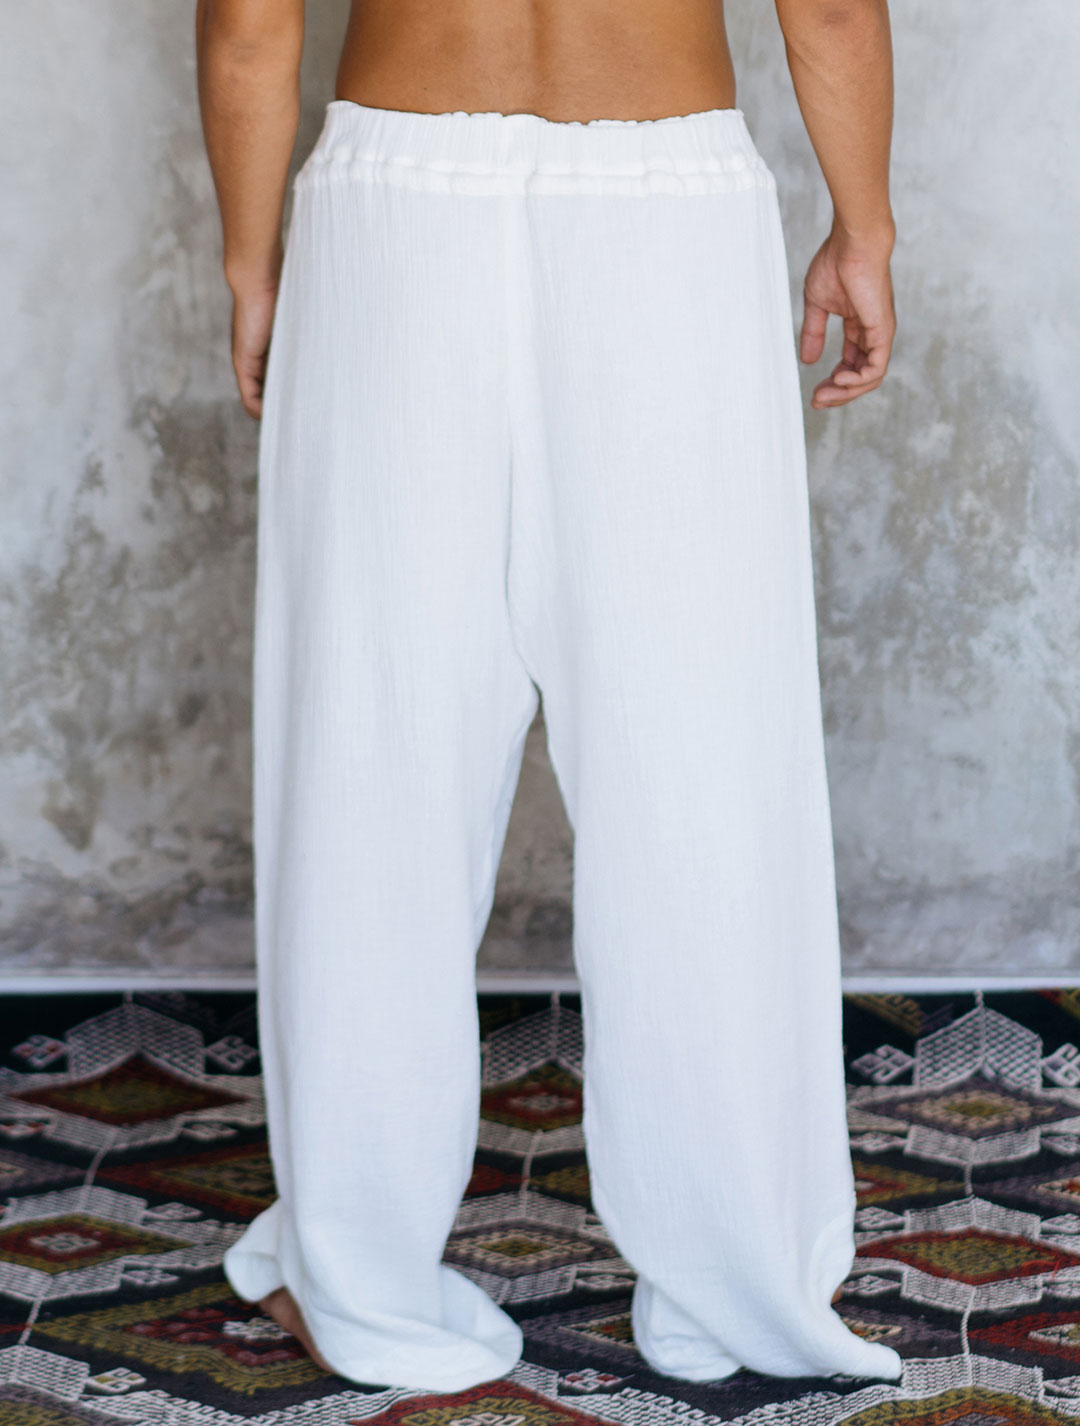 Harem yoga pants in soft cotton jersey